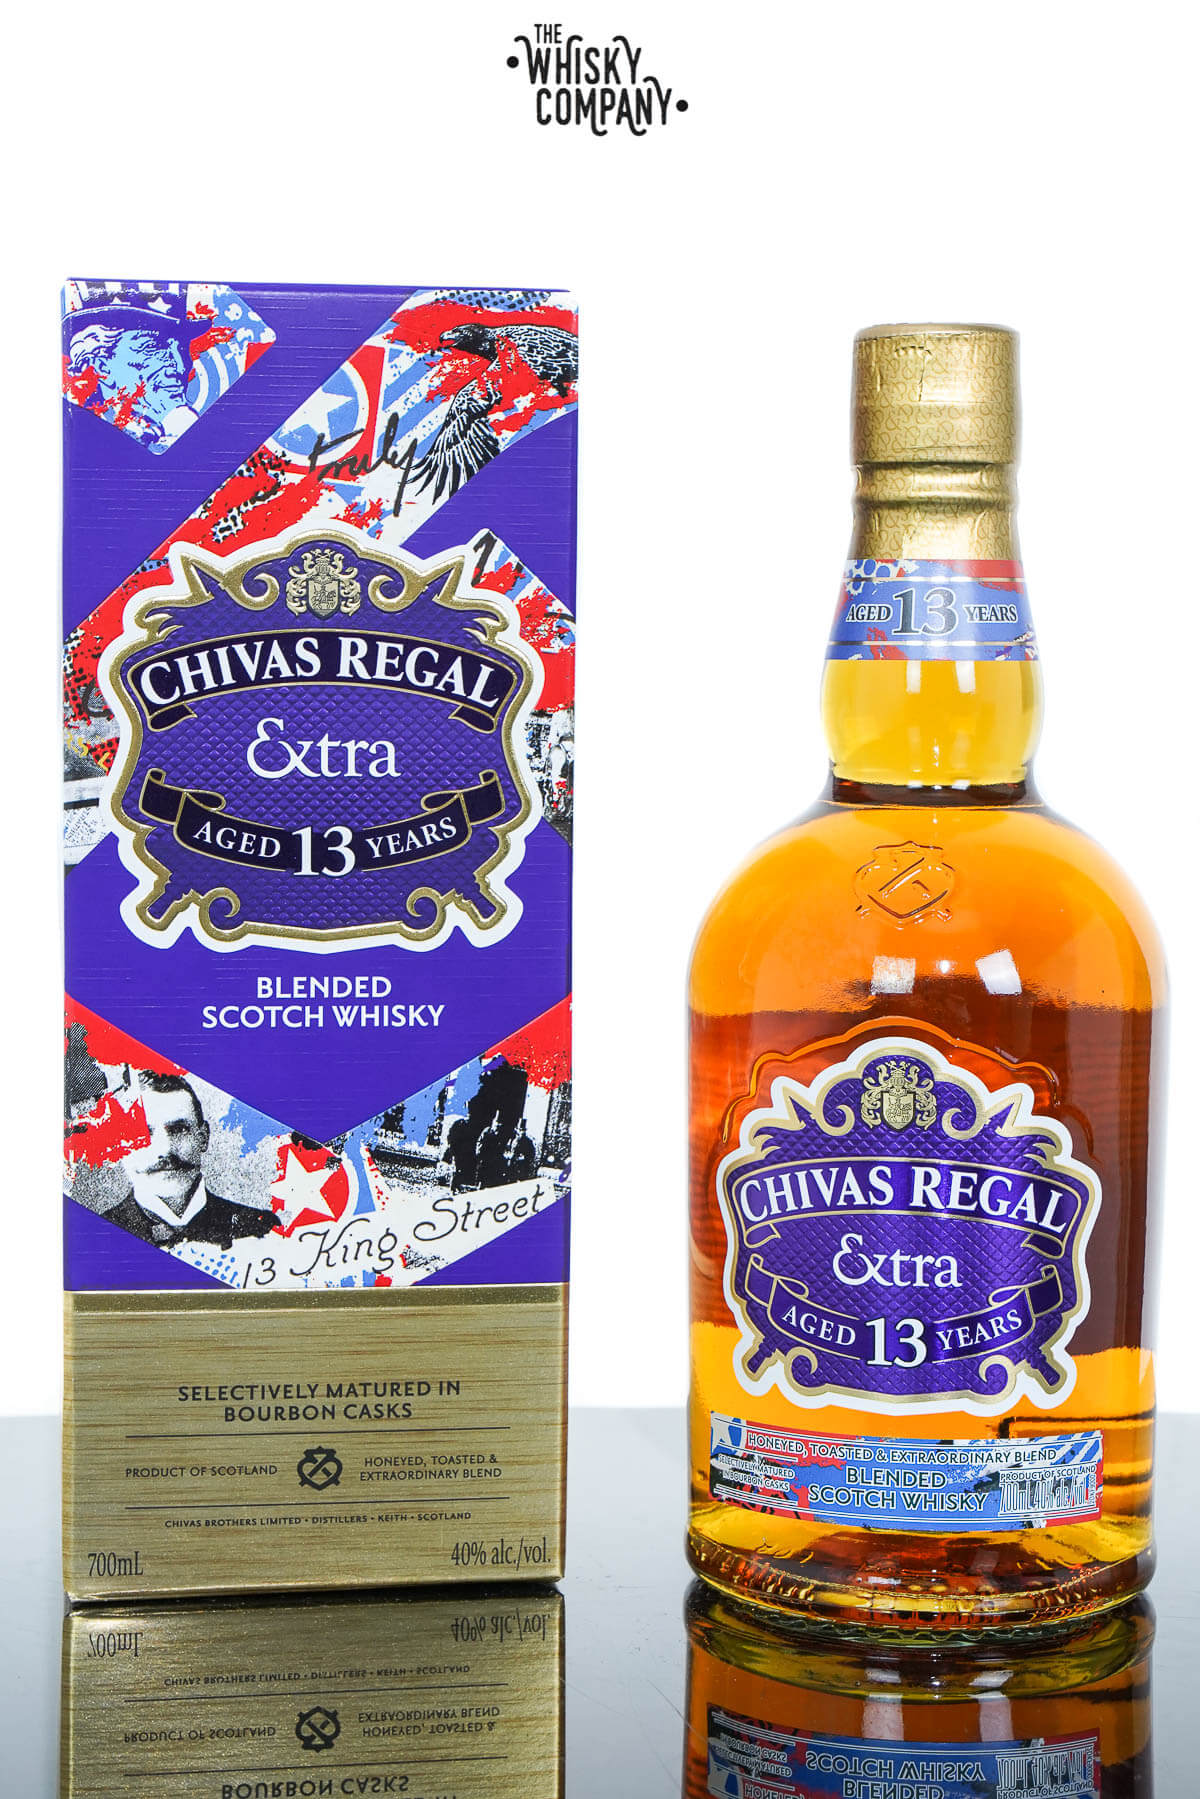 Chivas Regal Extra Bourbon Cask Aged 13 Whisky